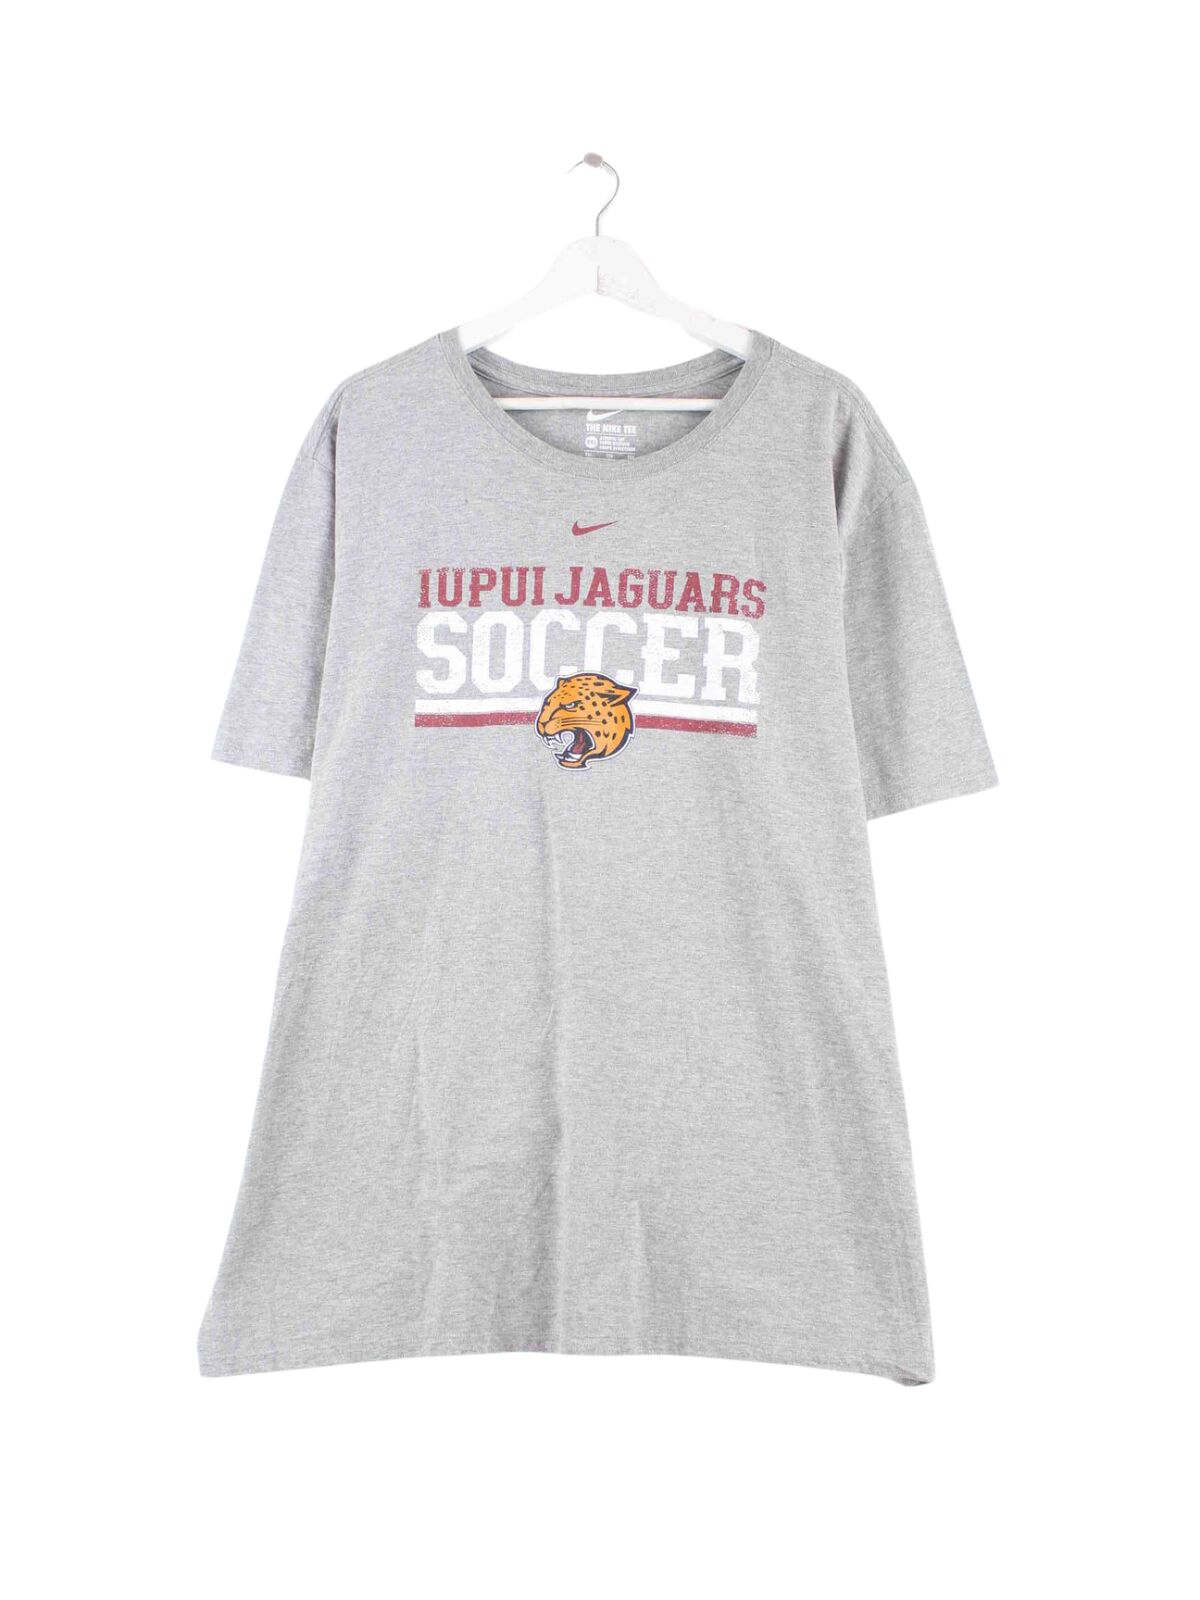 Nike Iupui Jaguars Print T-Shirt Grau XXL (front image)